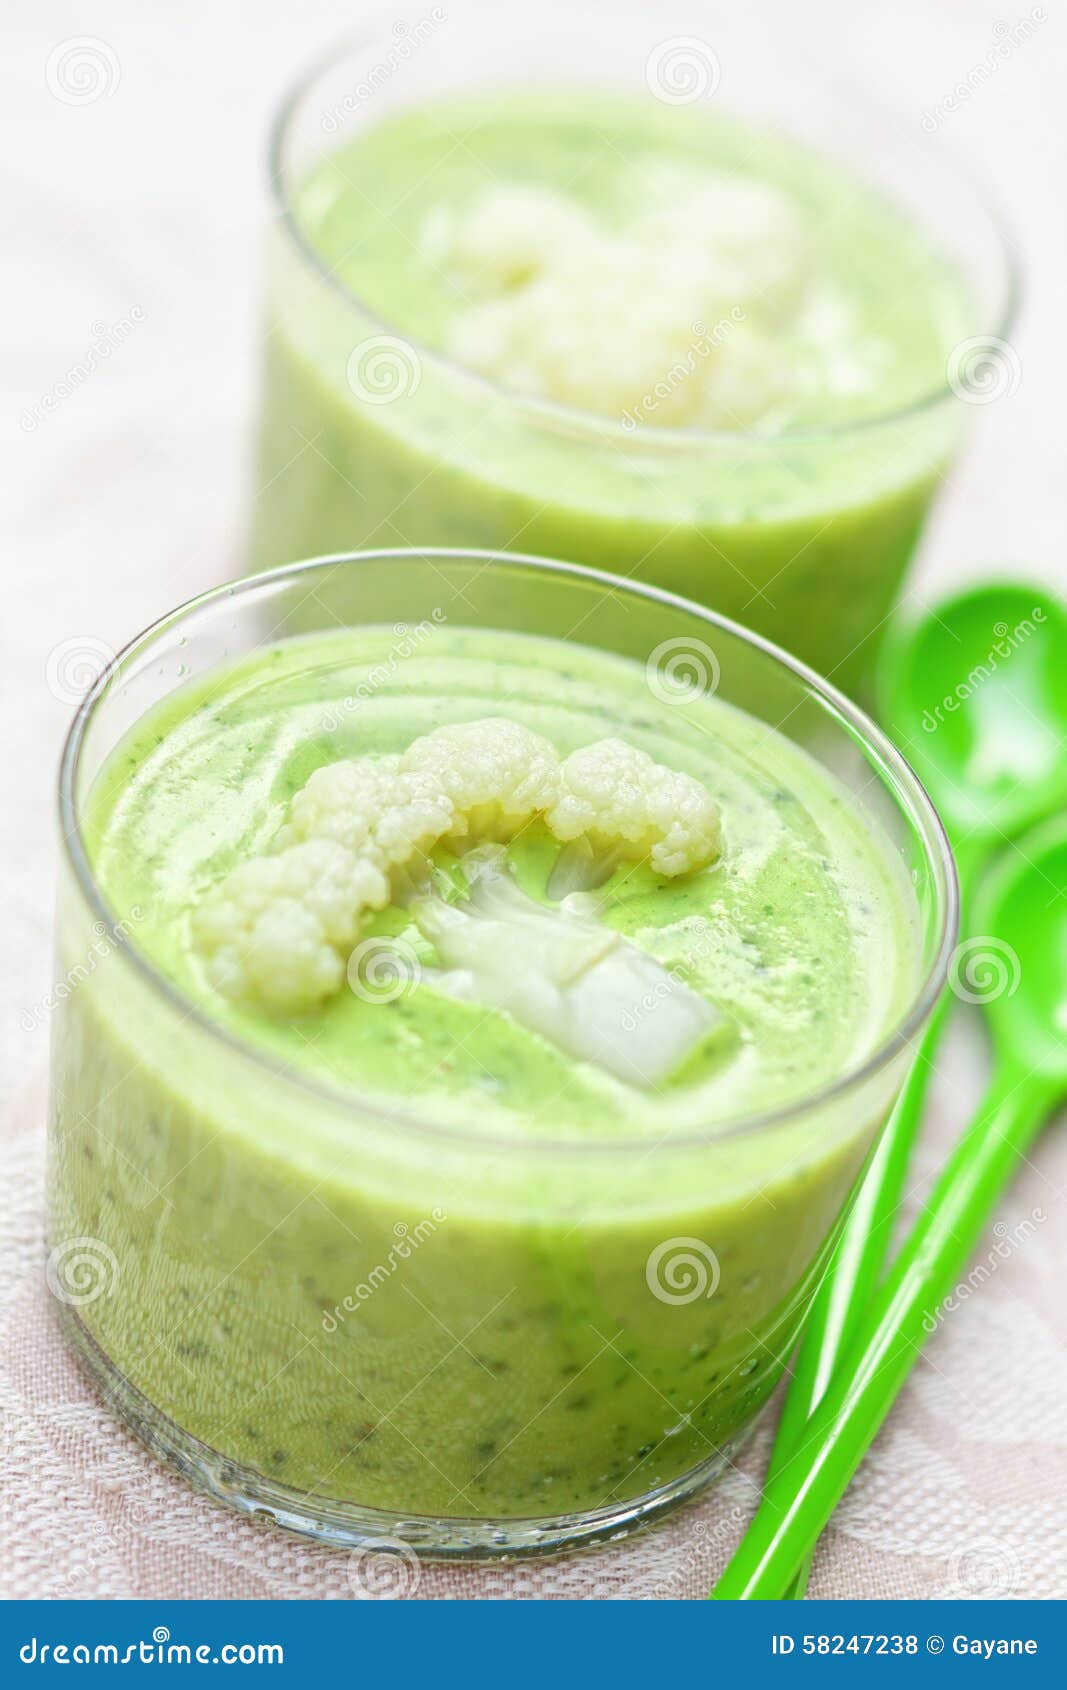 cream soup with cauliflower